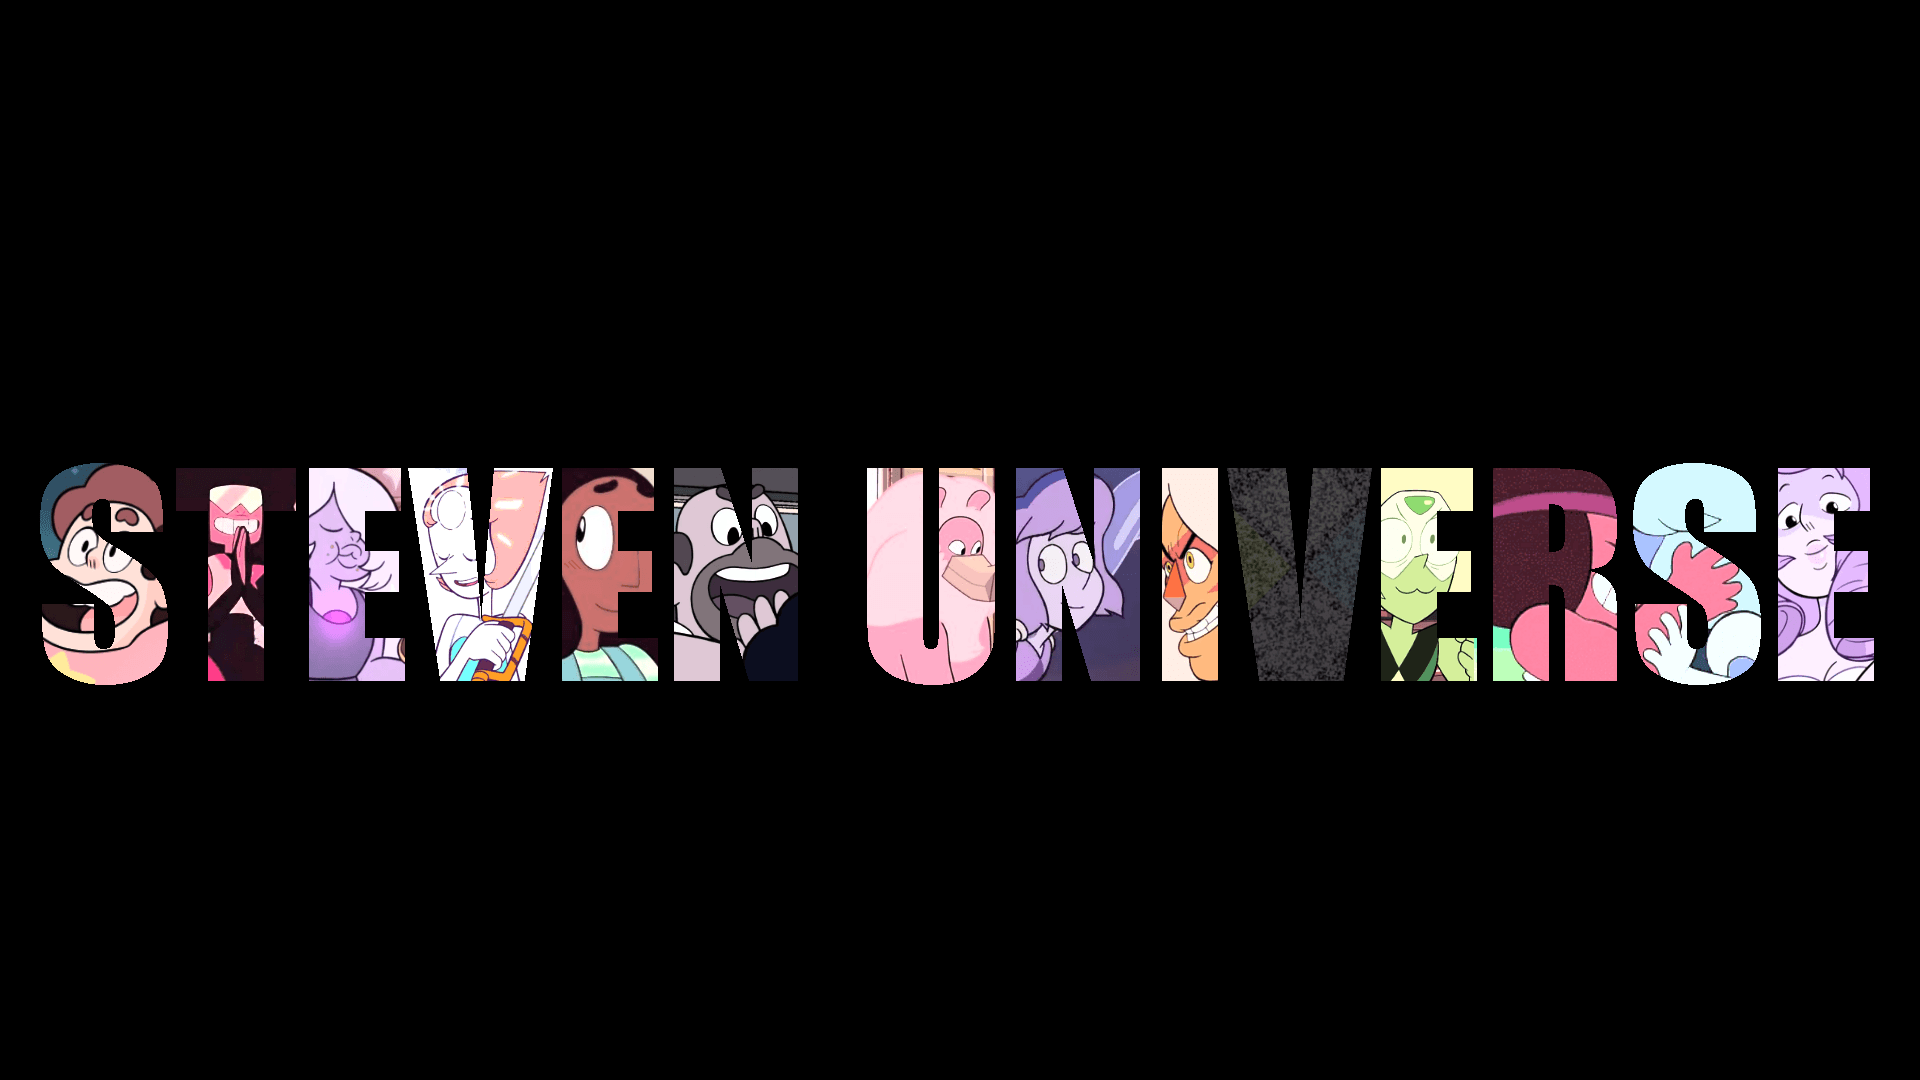 Steven Universe wallpaper I made [1920x1080]